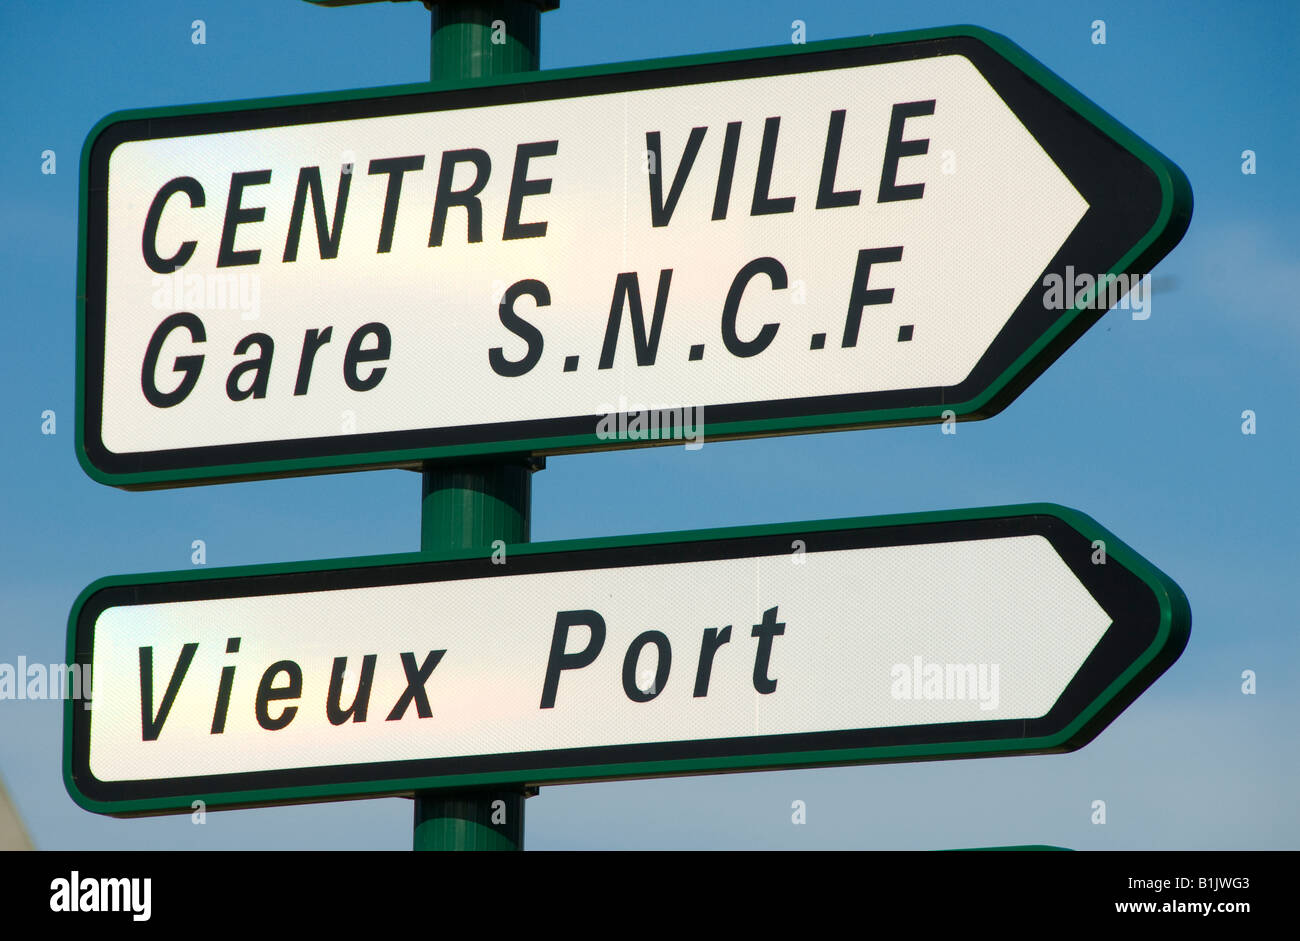 Centre Ville Gare S N C F sign Banque D'Images